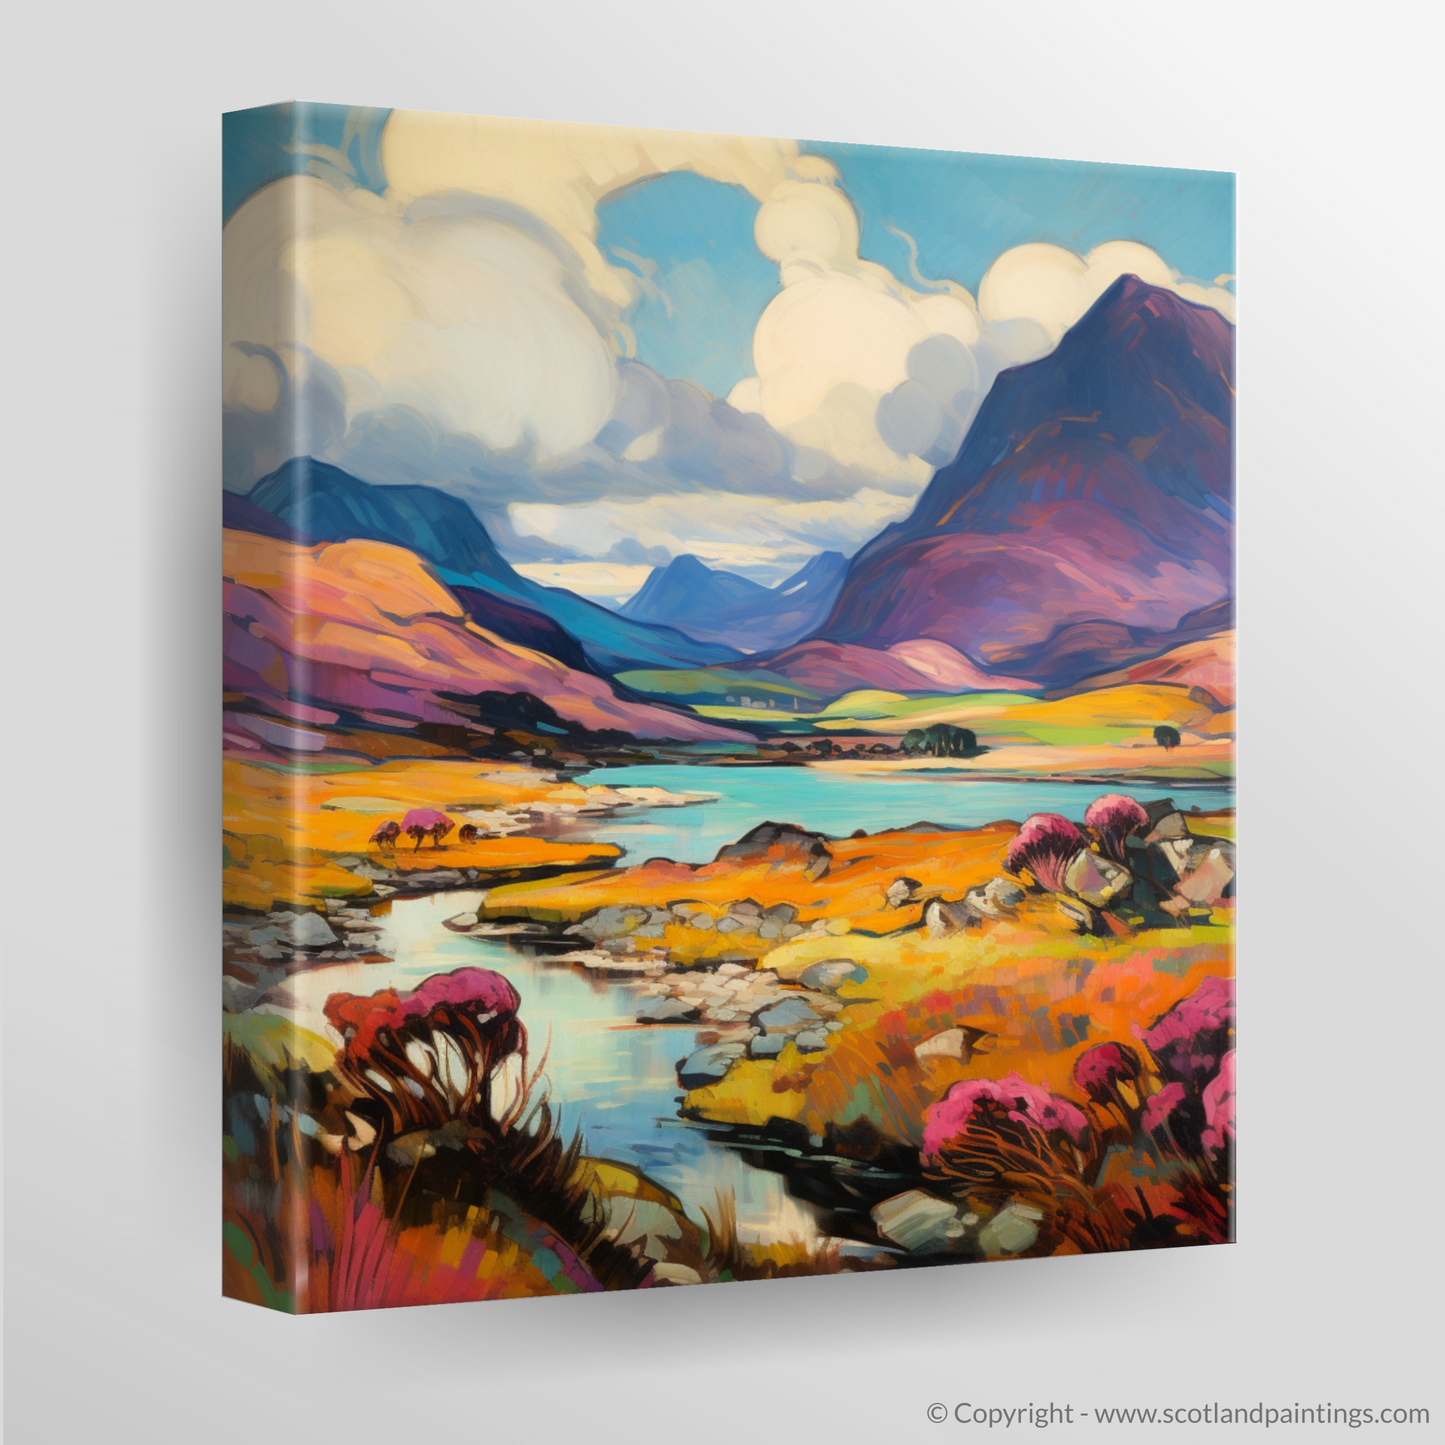 Lochnagar Unleashed: A Fauvist Ode to the Scottish Munros